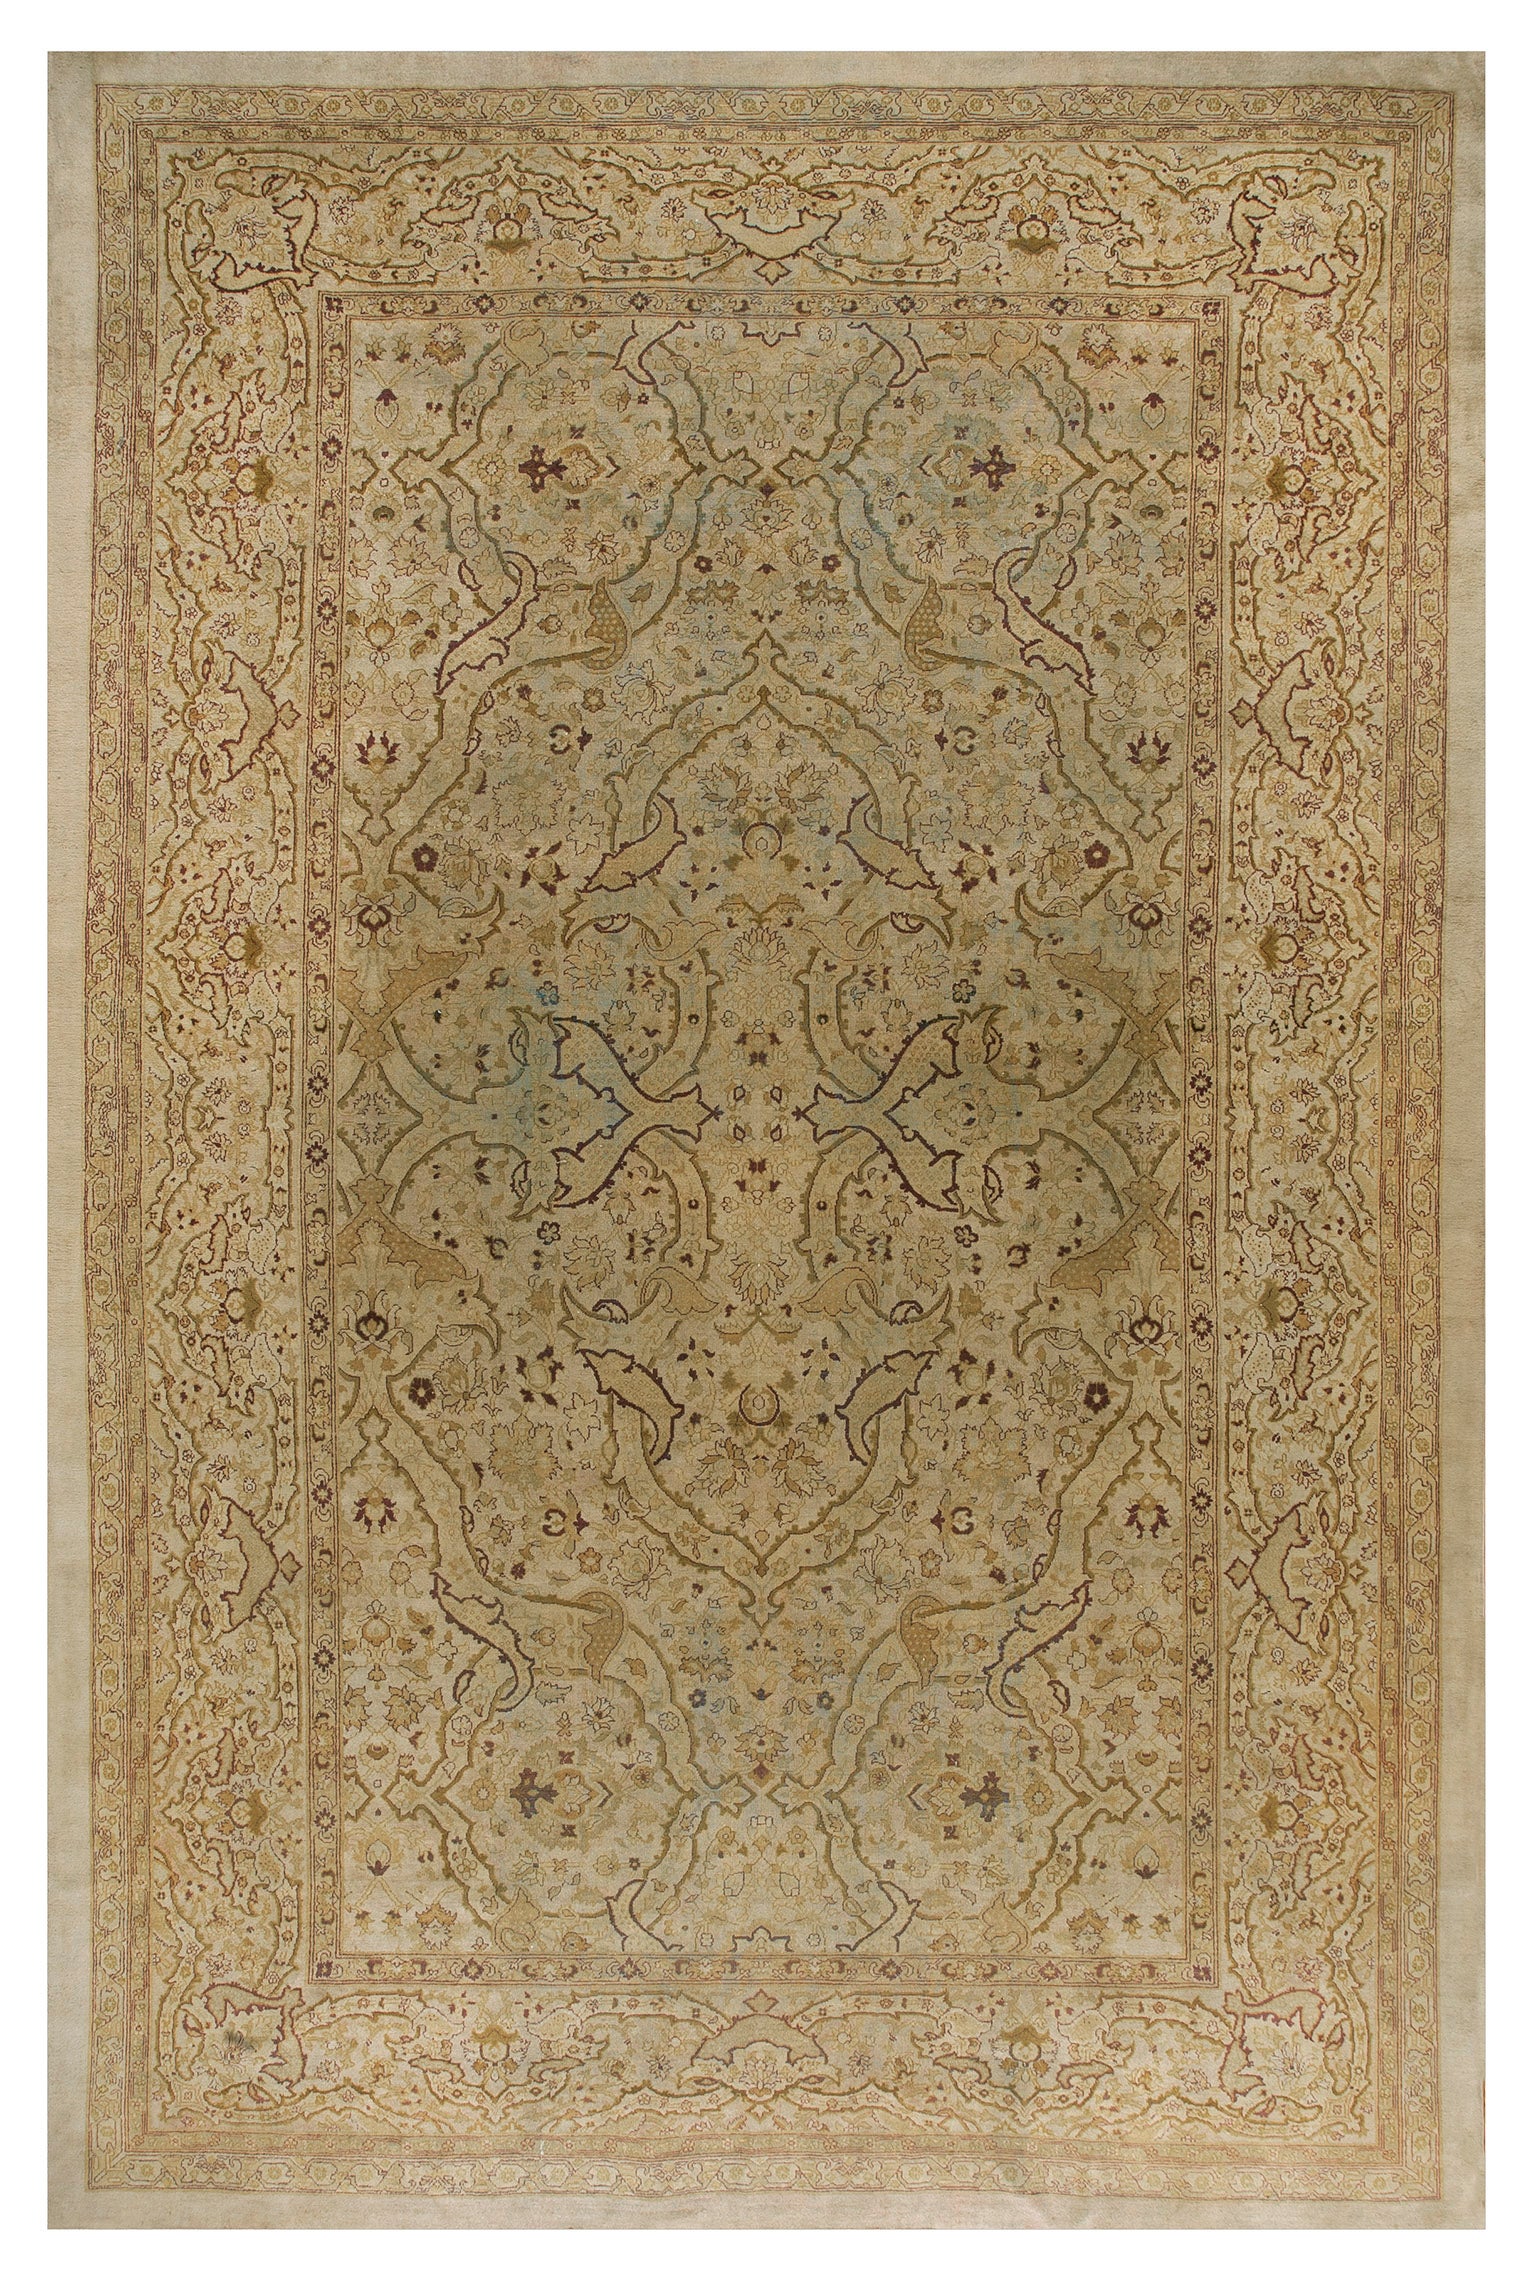 Late 19th Century Indian Amritsar Carpet ( 11' x 17' - 335 x 518 )